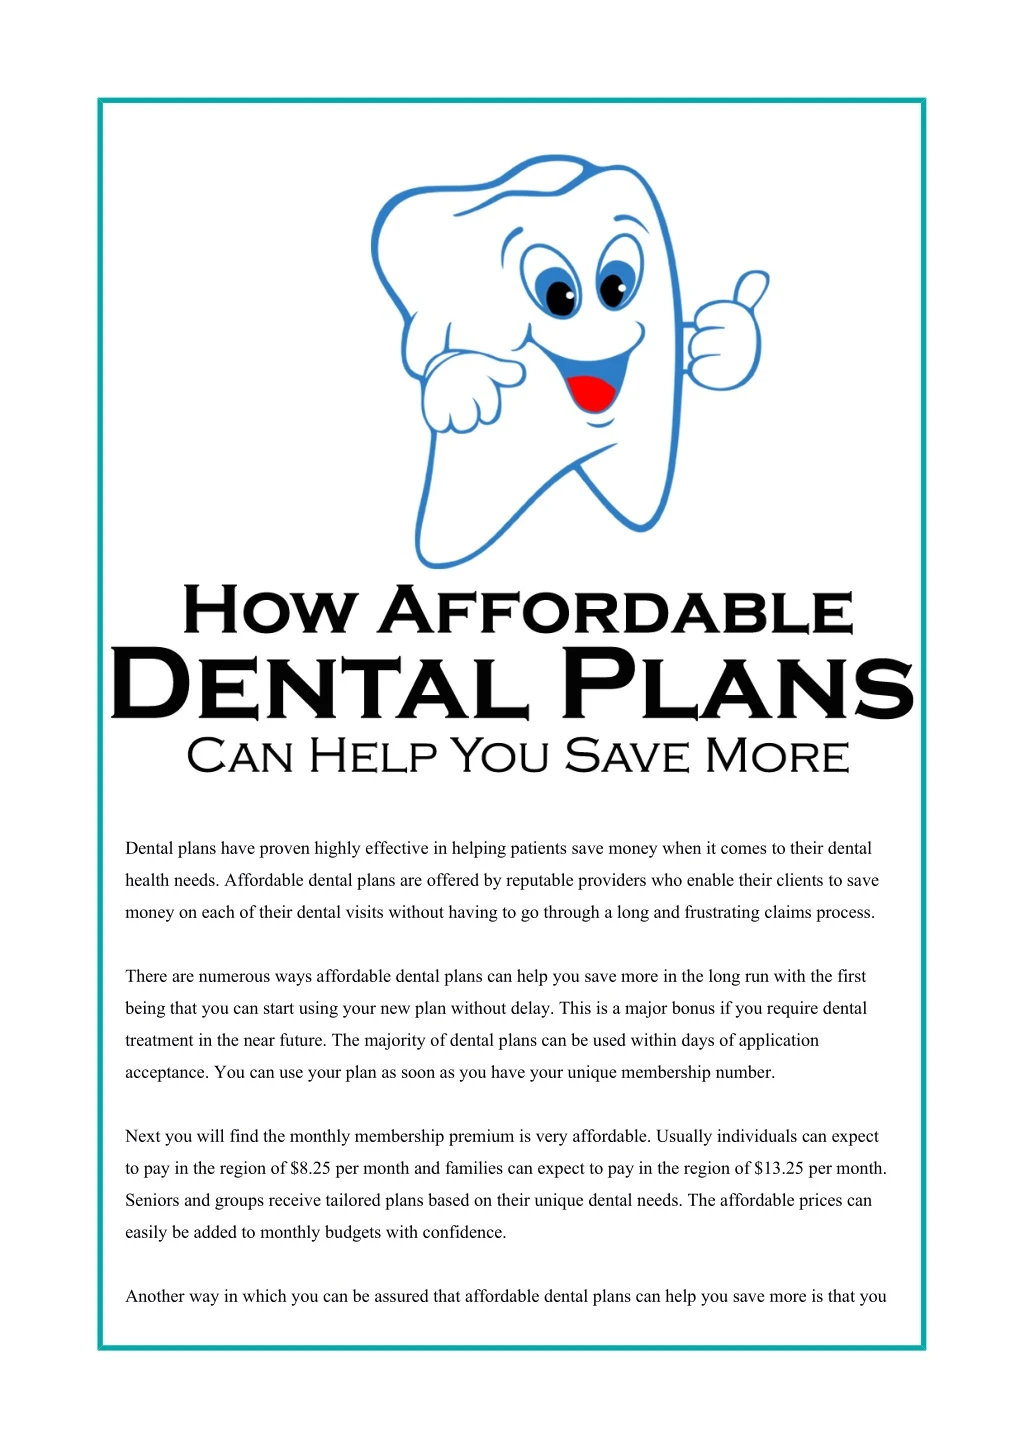 dental plans have proven highly effective